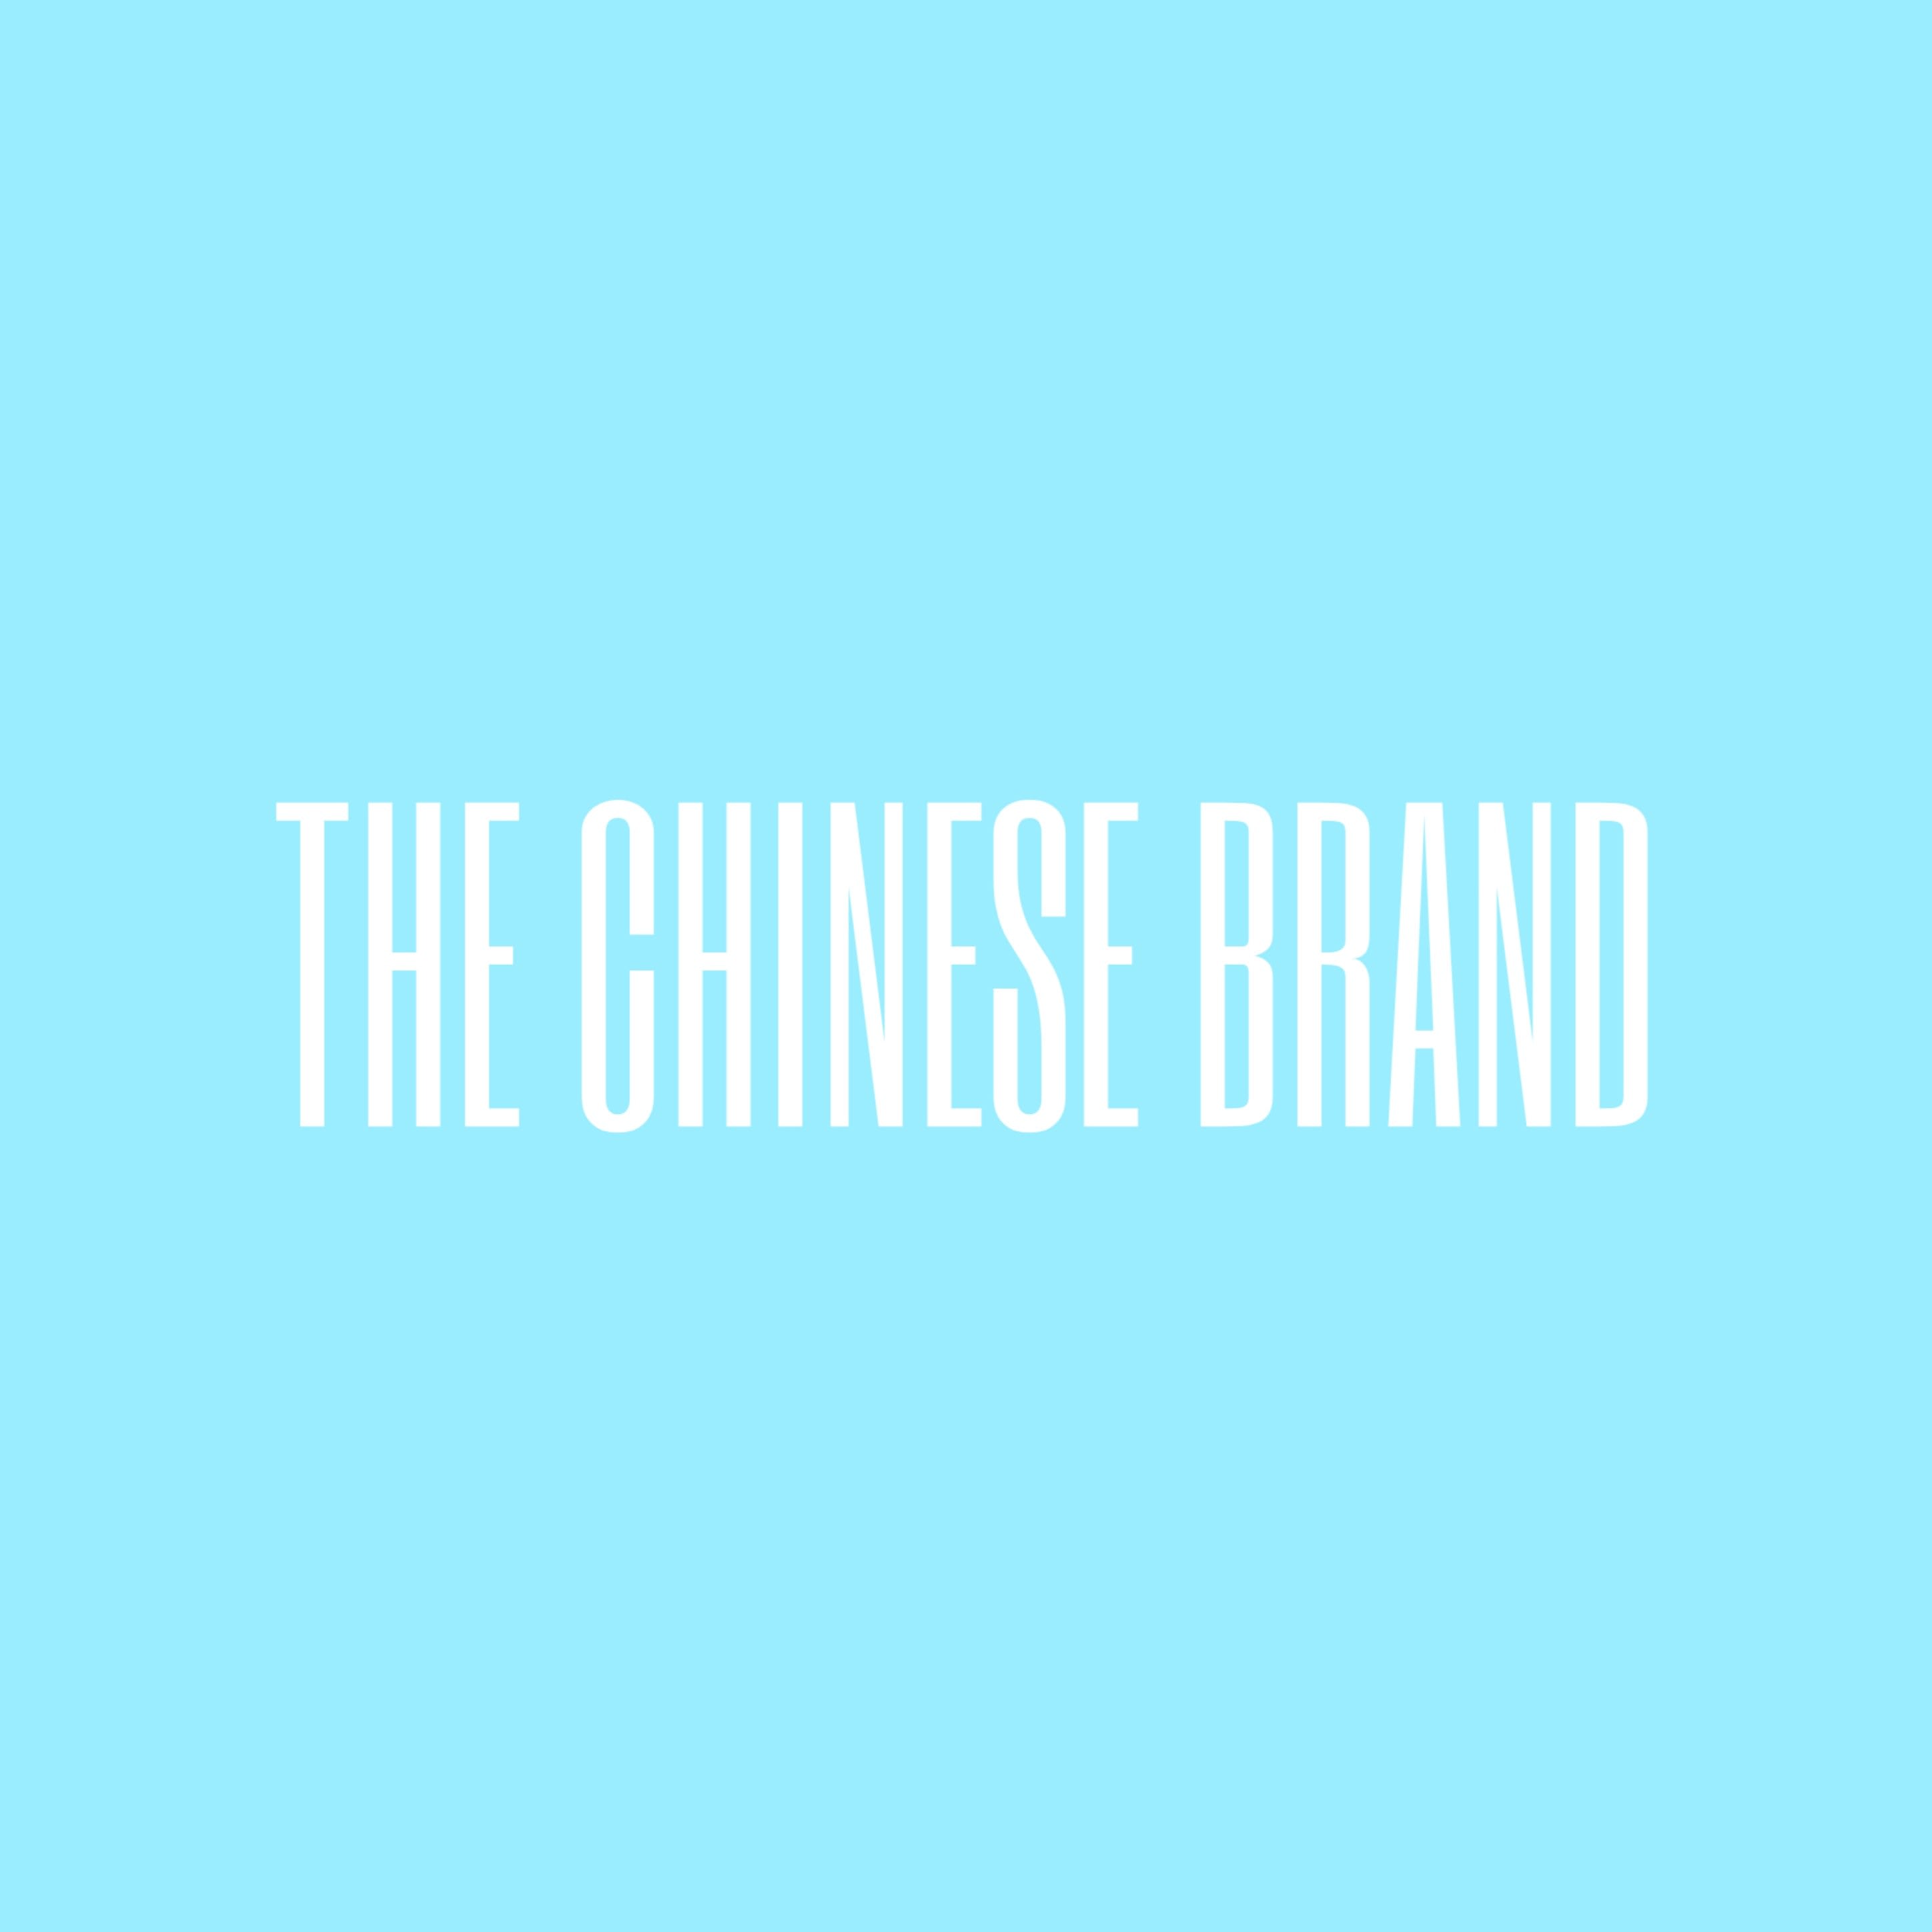 The Chinese Brand